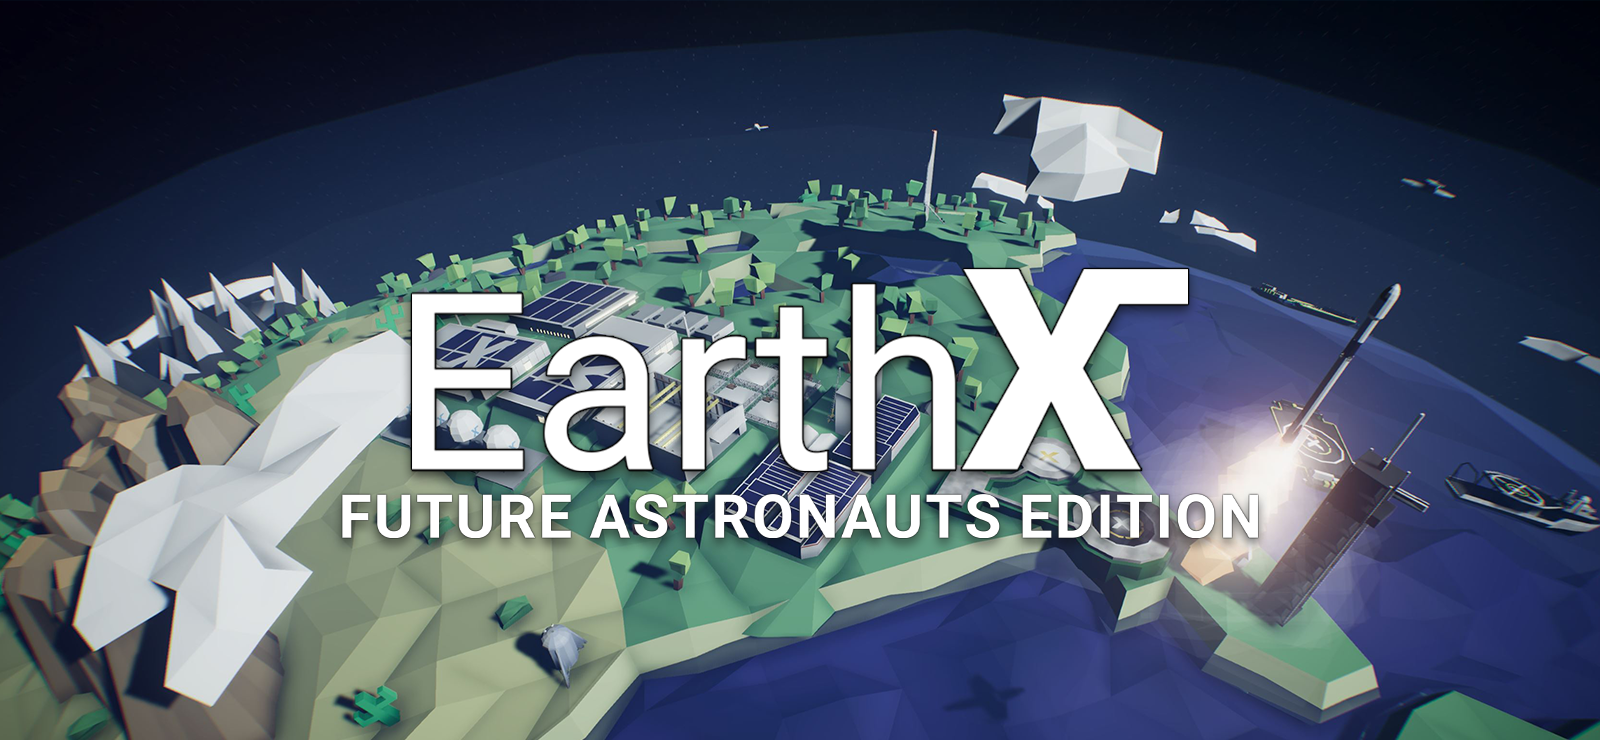 EarthX - Future Astronauts Edition